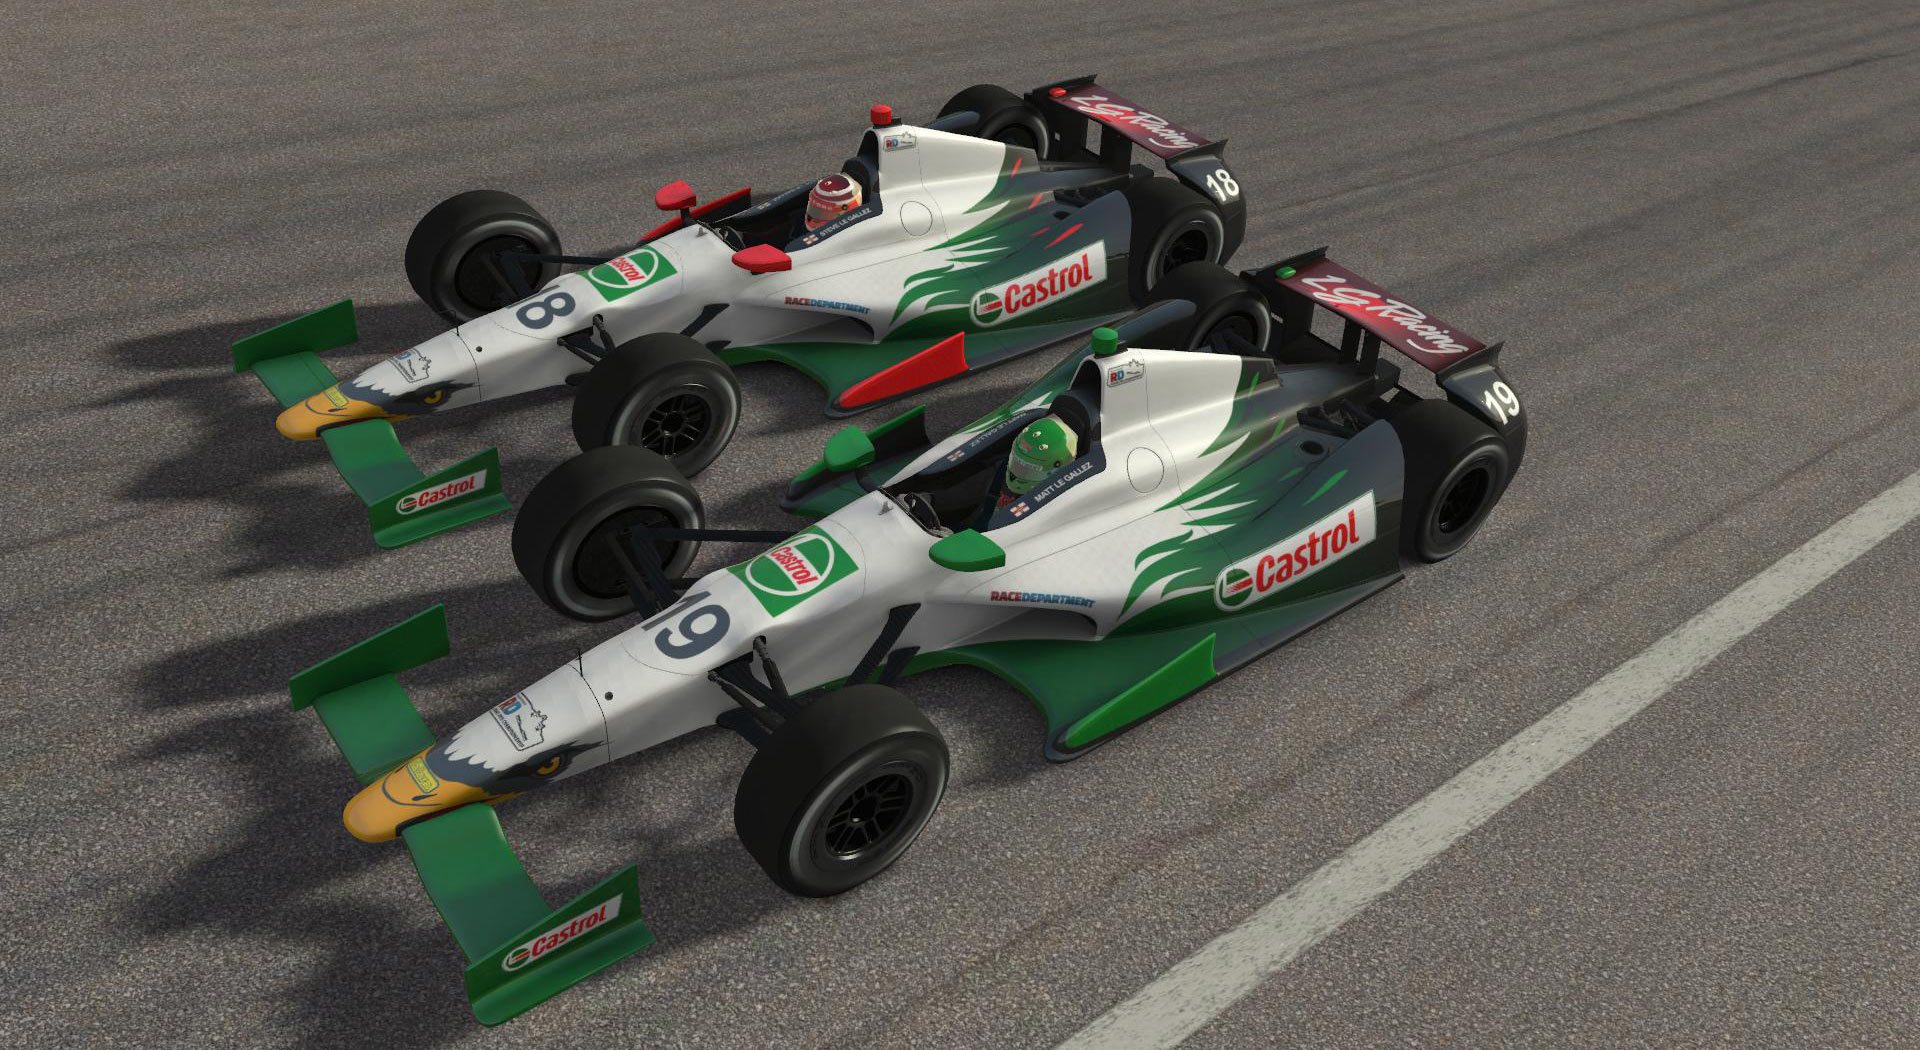 LG_Racing.jpg